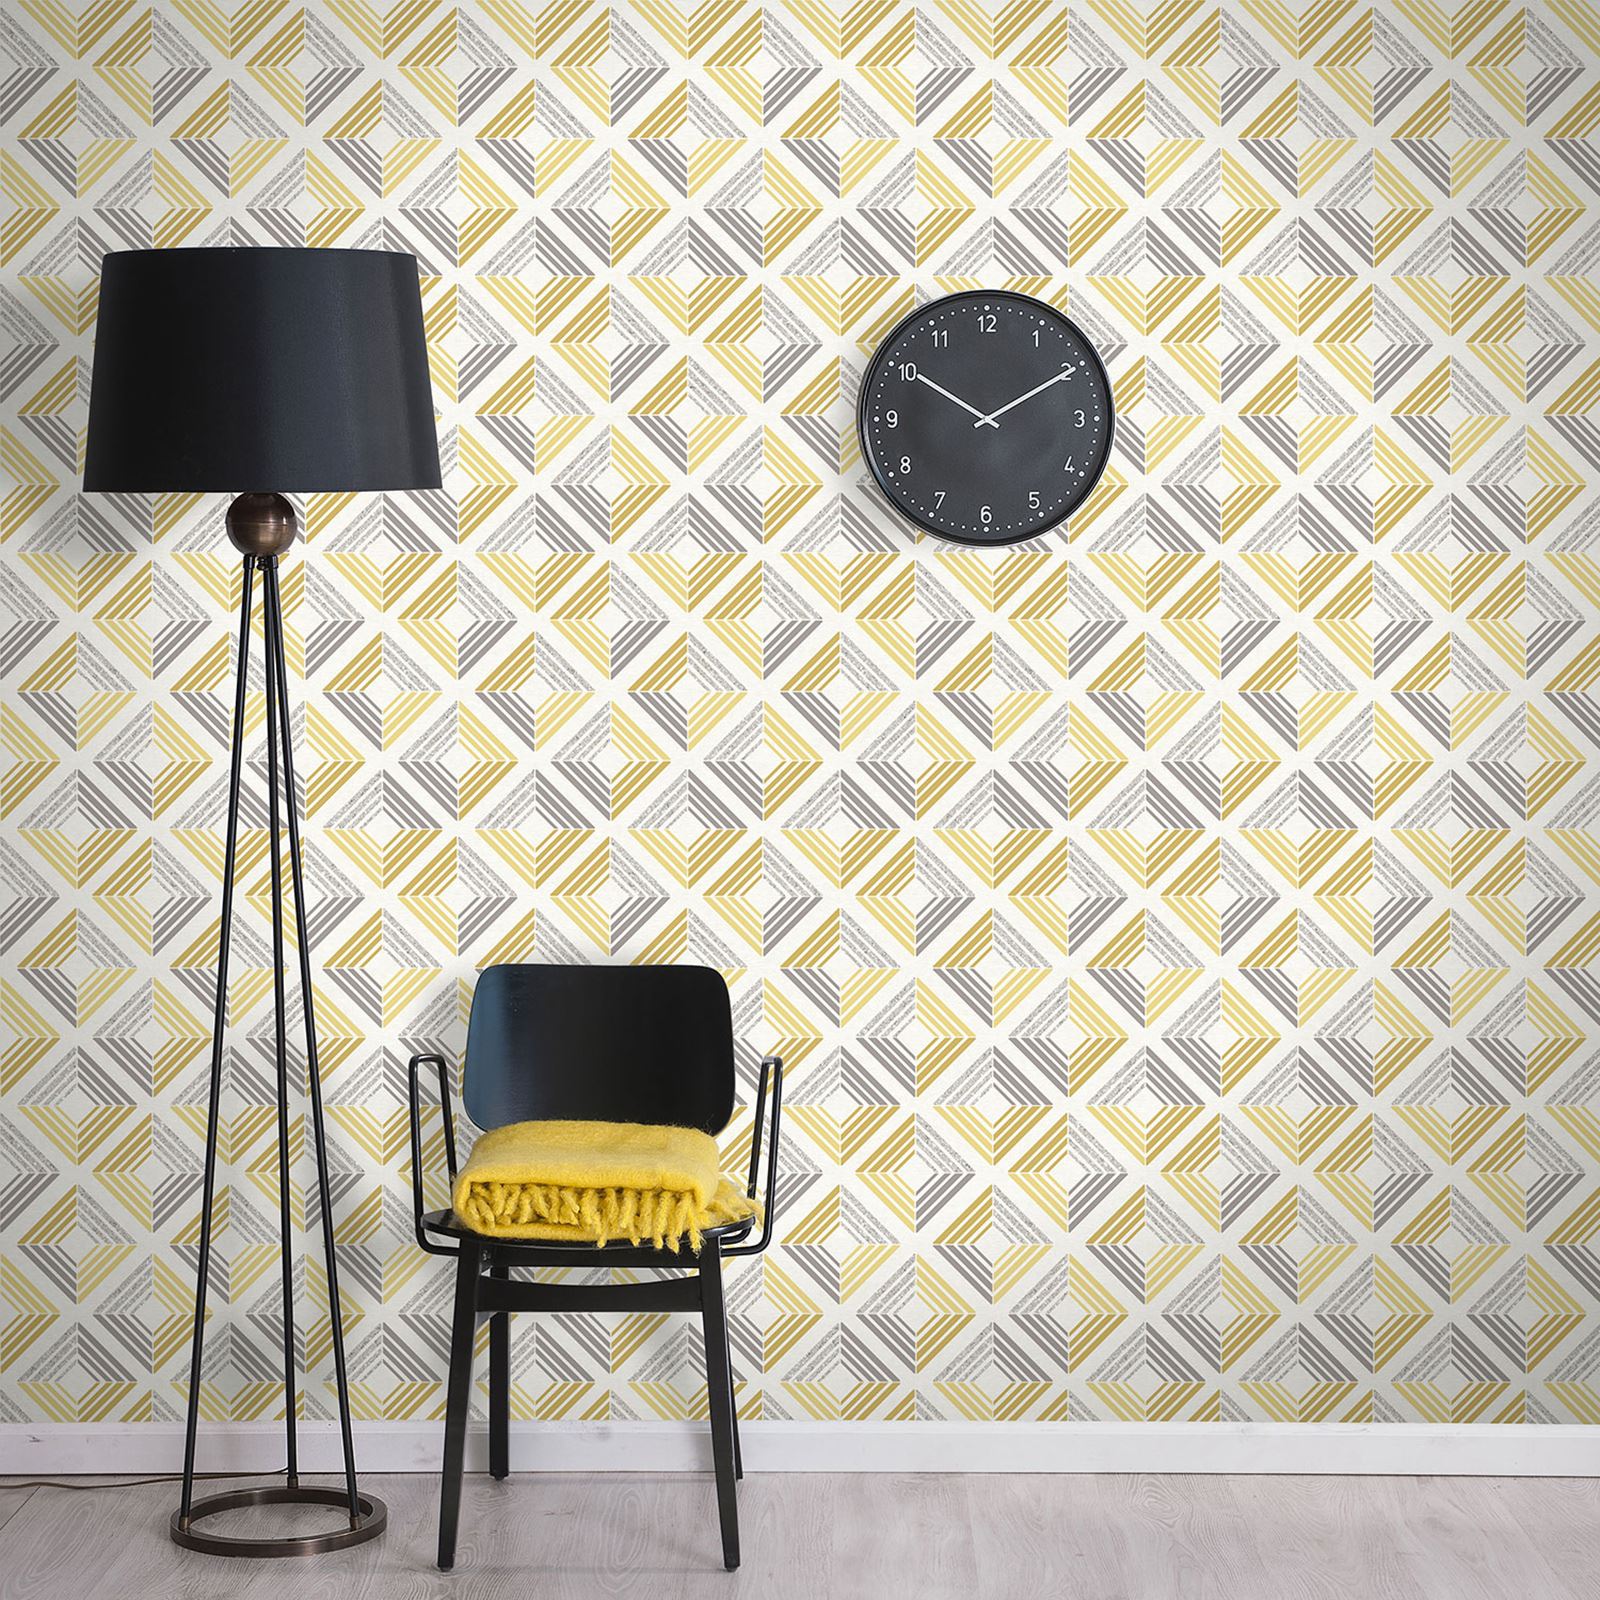 grey and yellow wallpaper,yellow,wallpaper,wall,tile,room